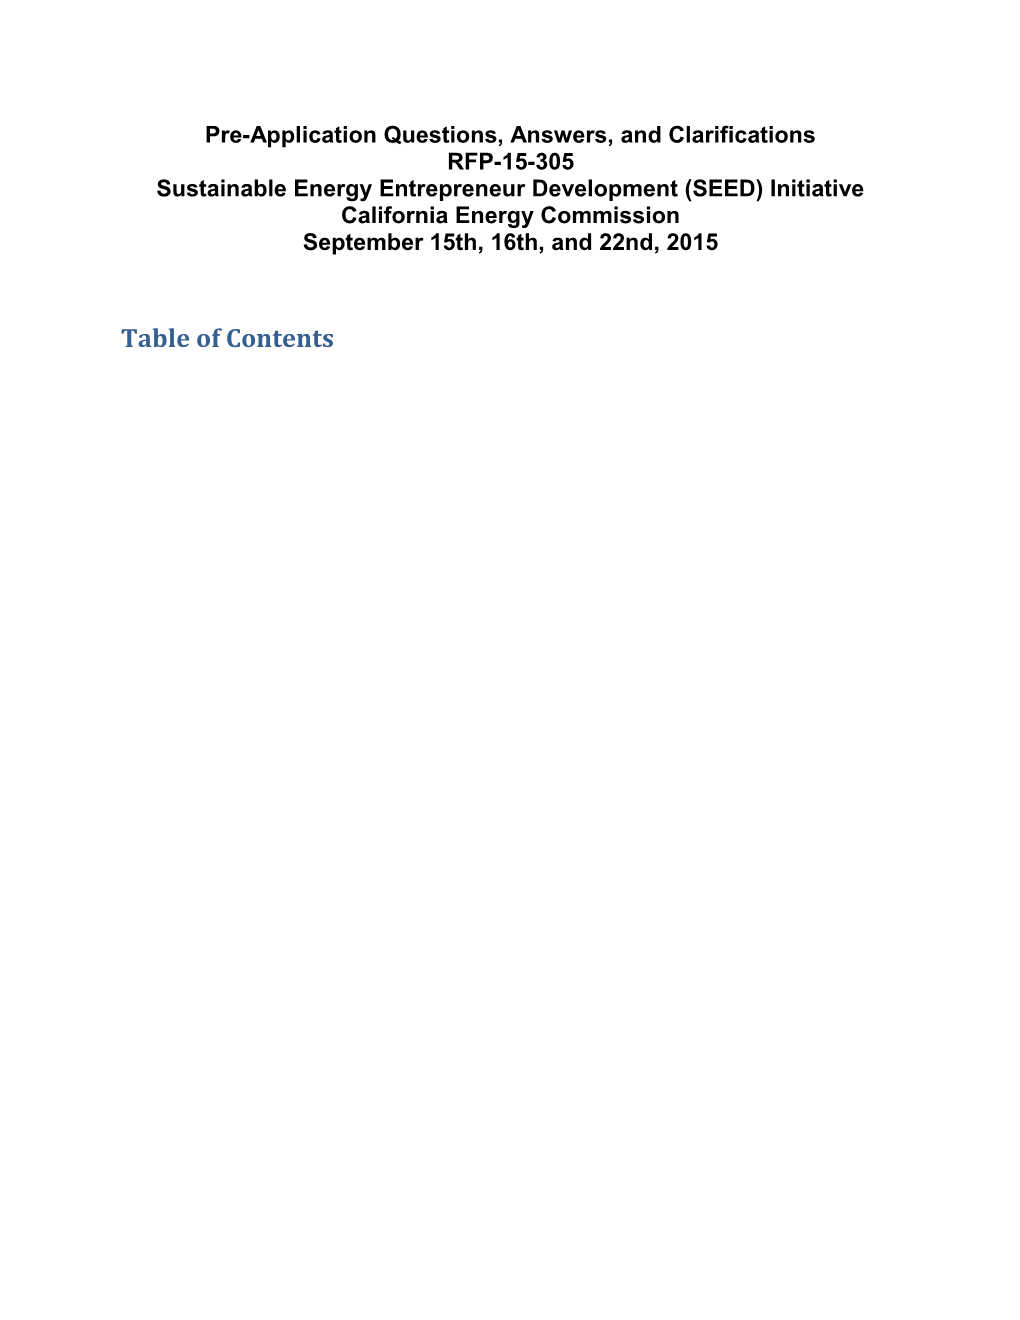 Sustainable Energy Entrepreneur Development (SEED) Initiative